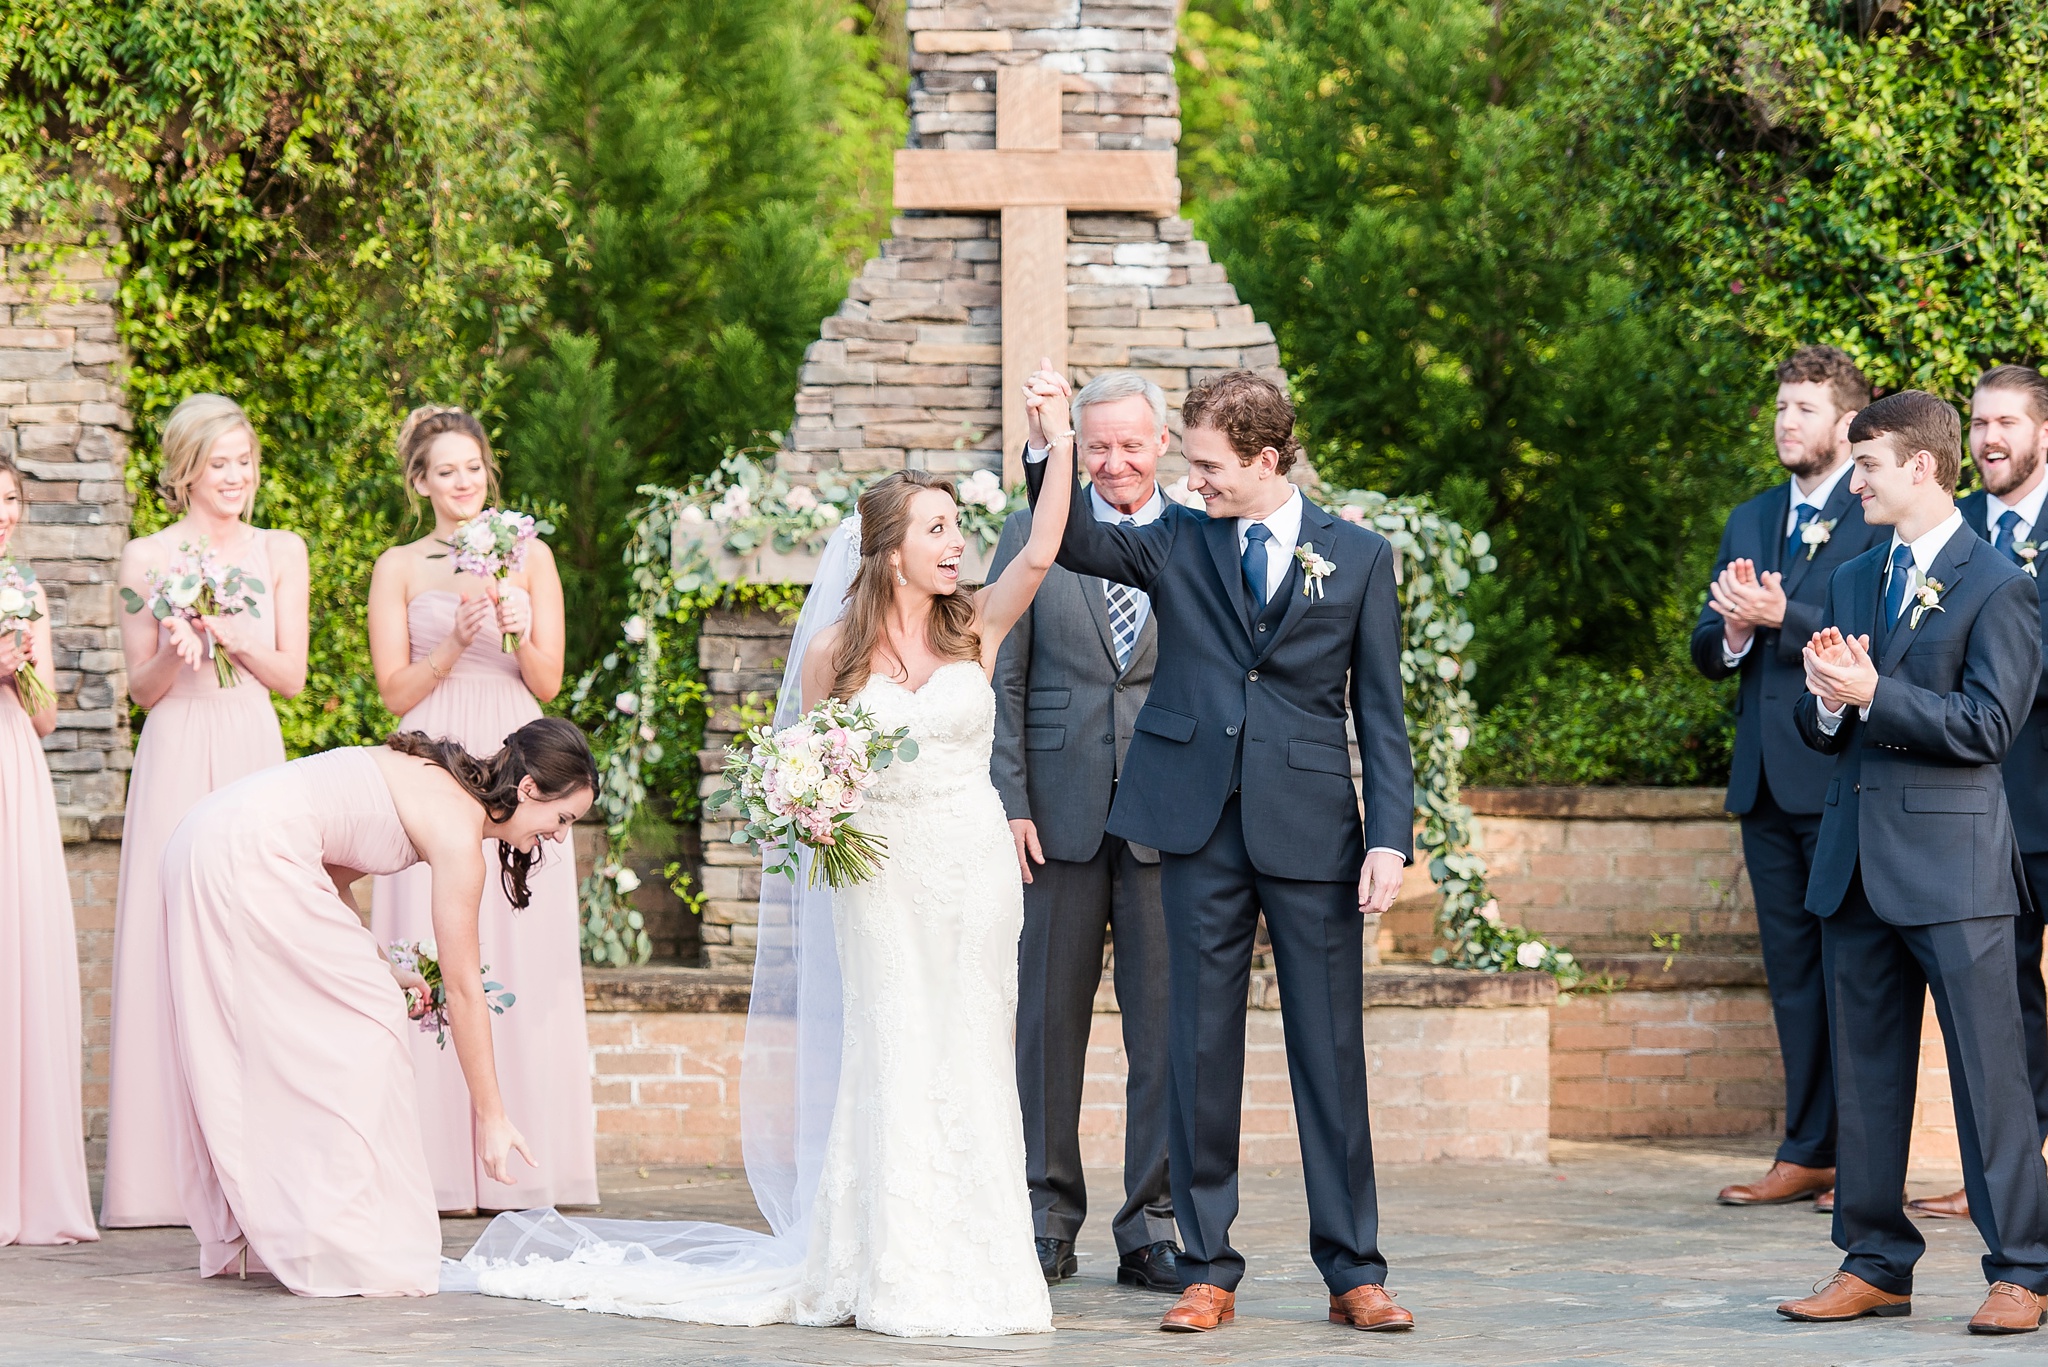 Sonnet House Blush and Gold Spring Wedding | Birmingham Alabama Wedding Photographers_0067.jpg